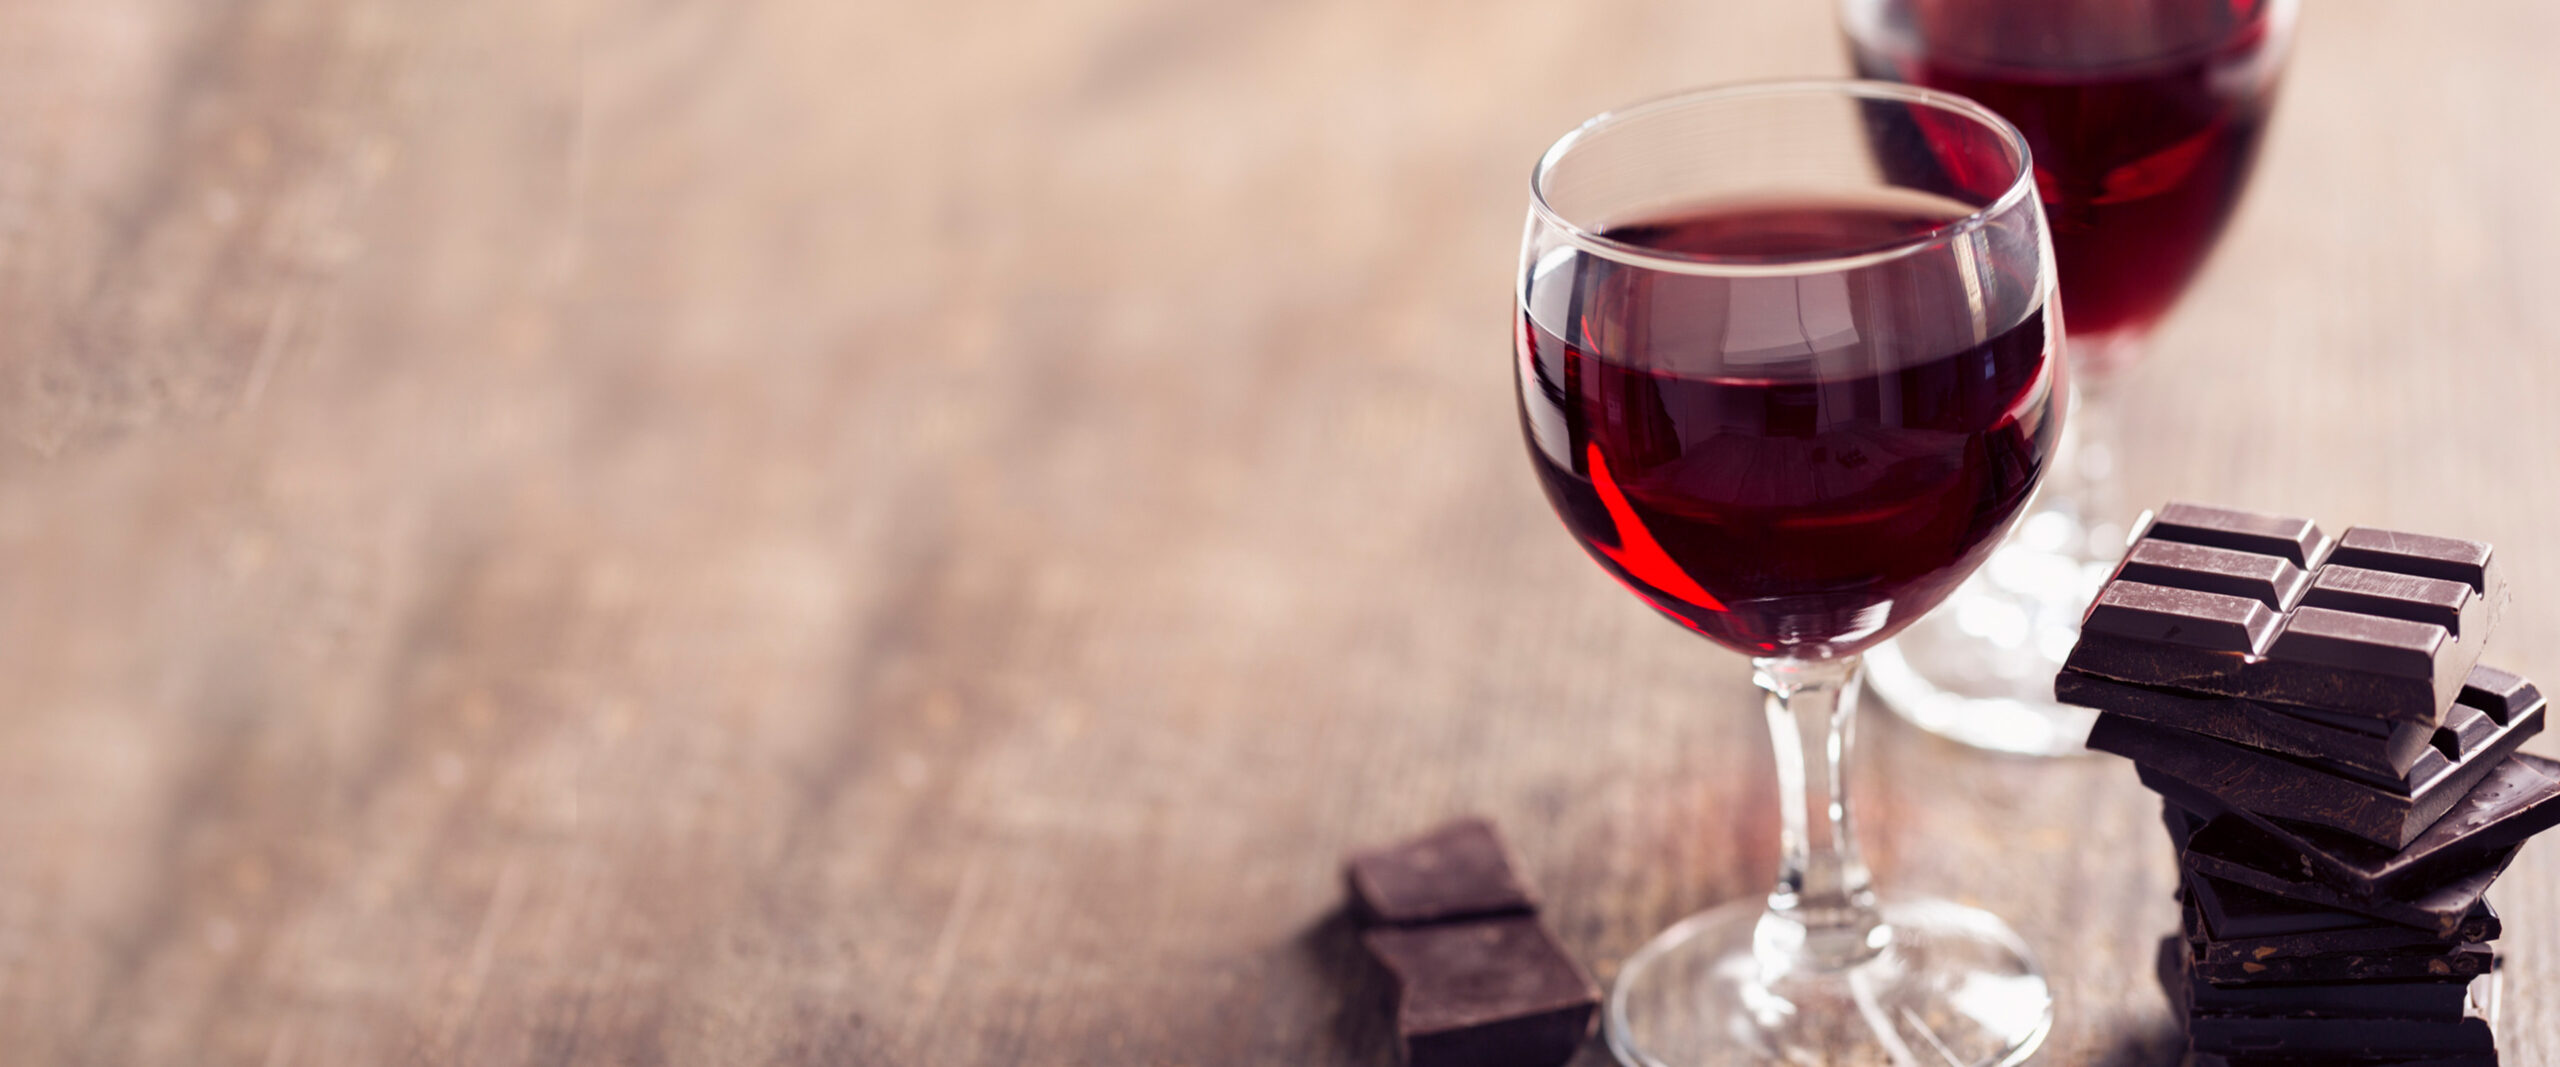 Wine and chocolate image